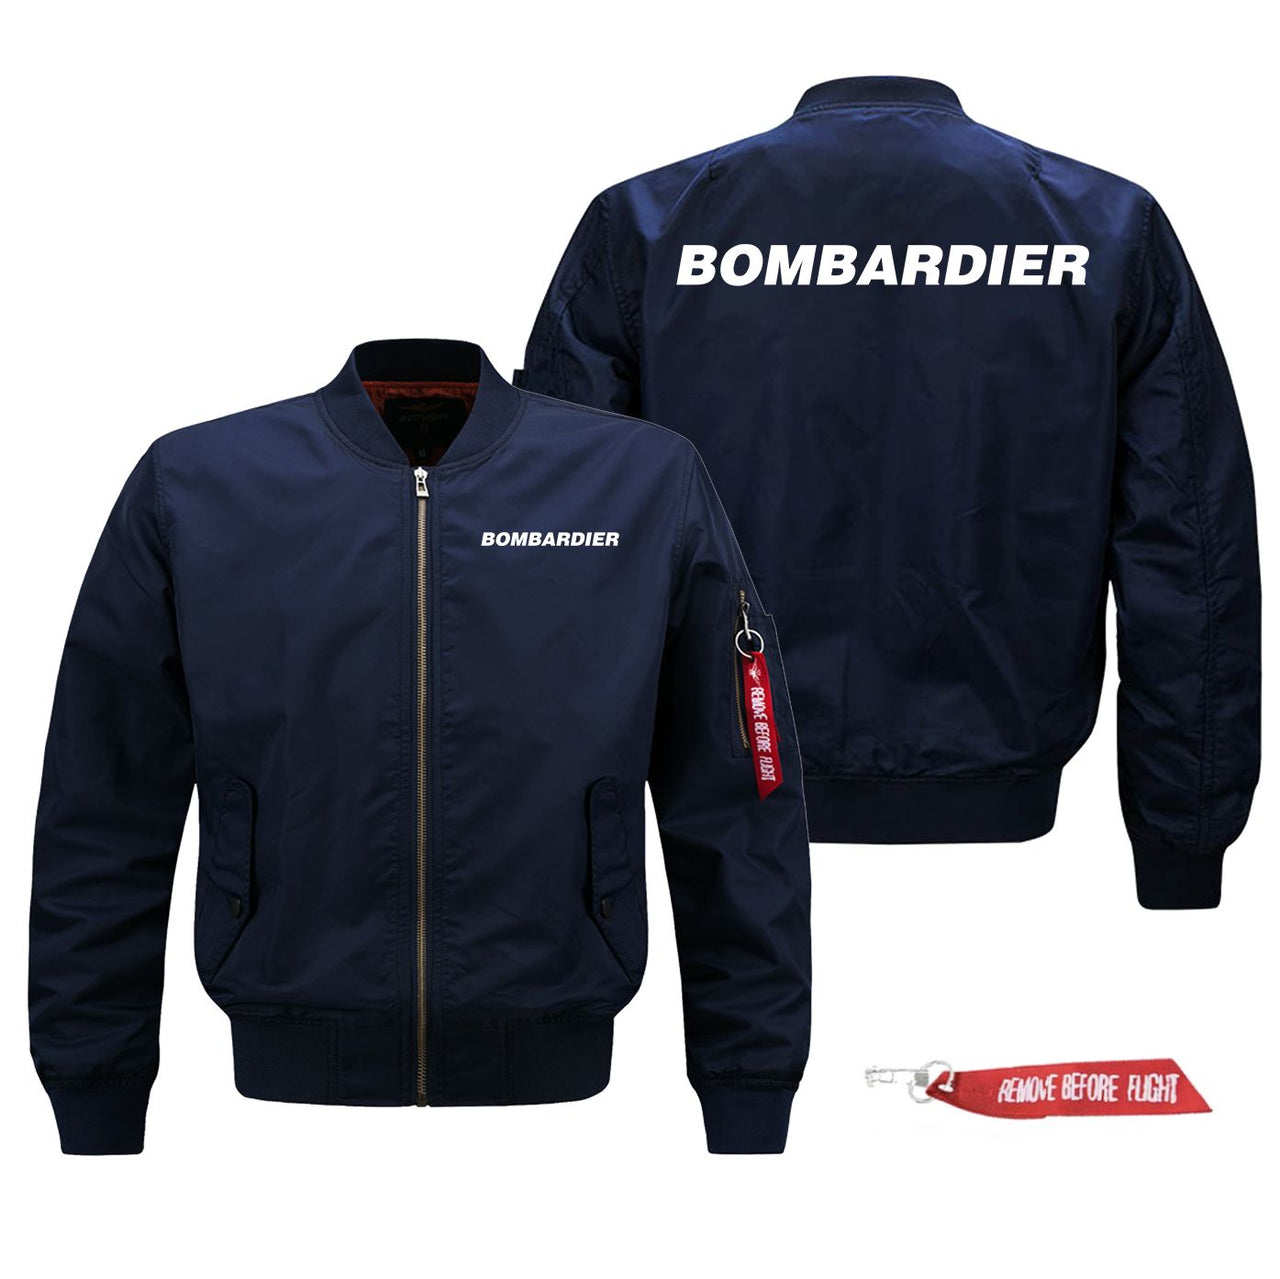 Bombardier & Text Designed Pilot Jackets (Customizable)